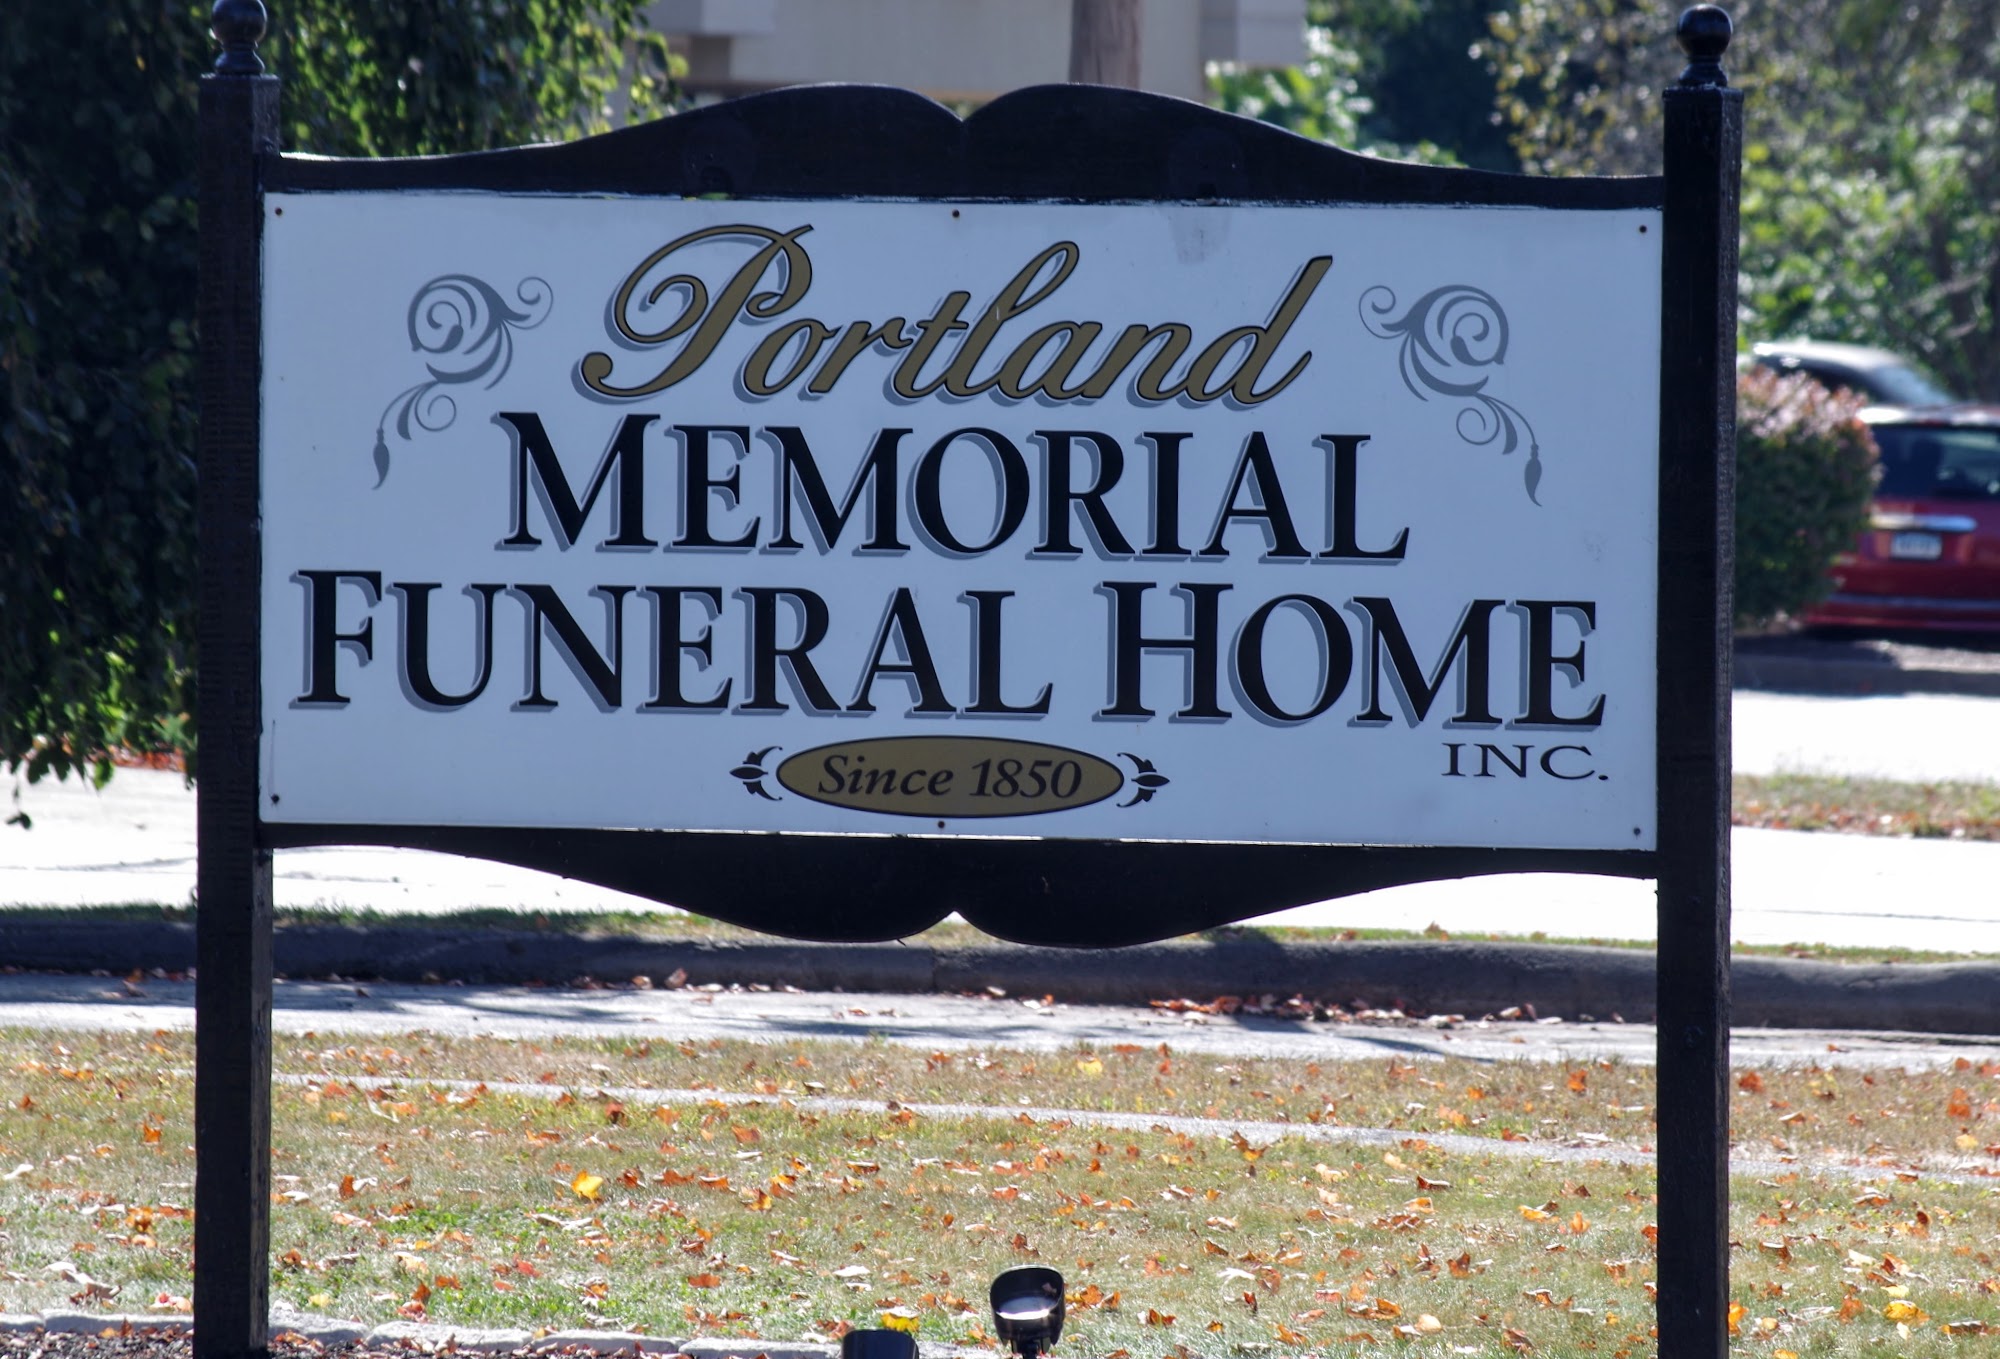 Portland Memorial Funeral Home 231 Main St, Portland Connecticut 06480